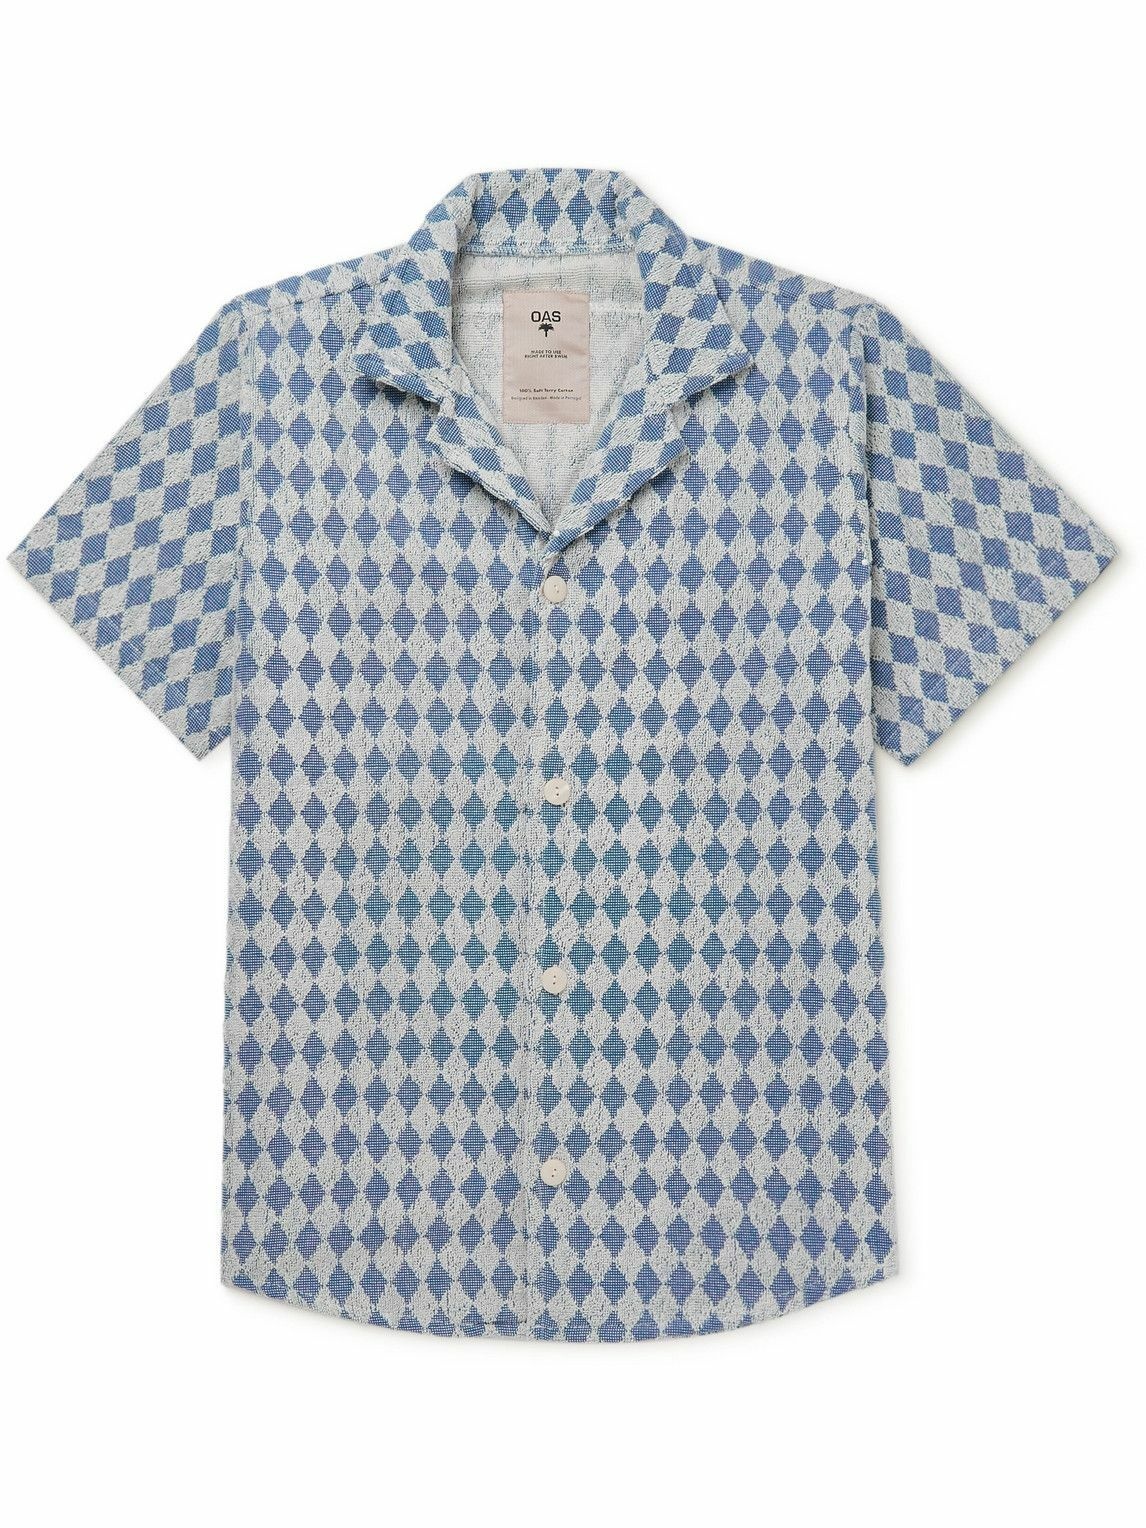 OAS - Cuba Argyle Cotton-Terry Jacquard Shirt - Blue OAS